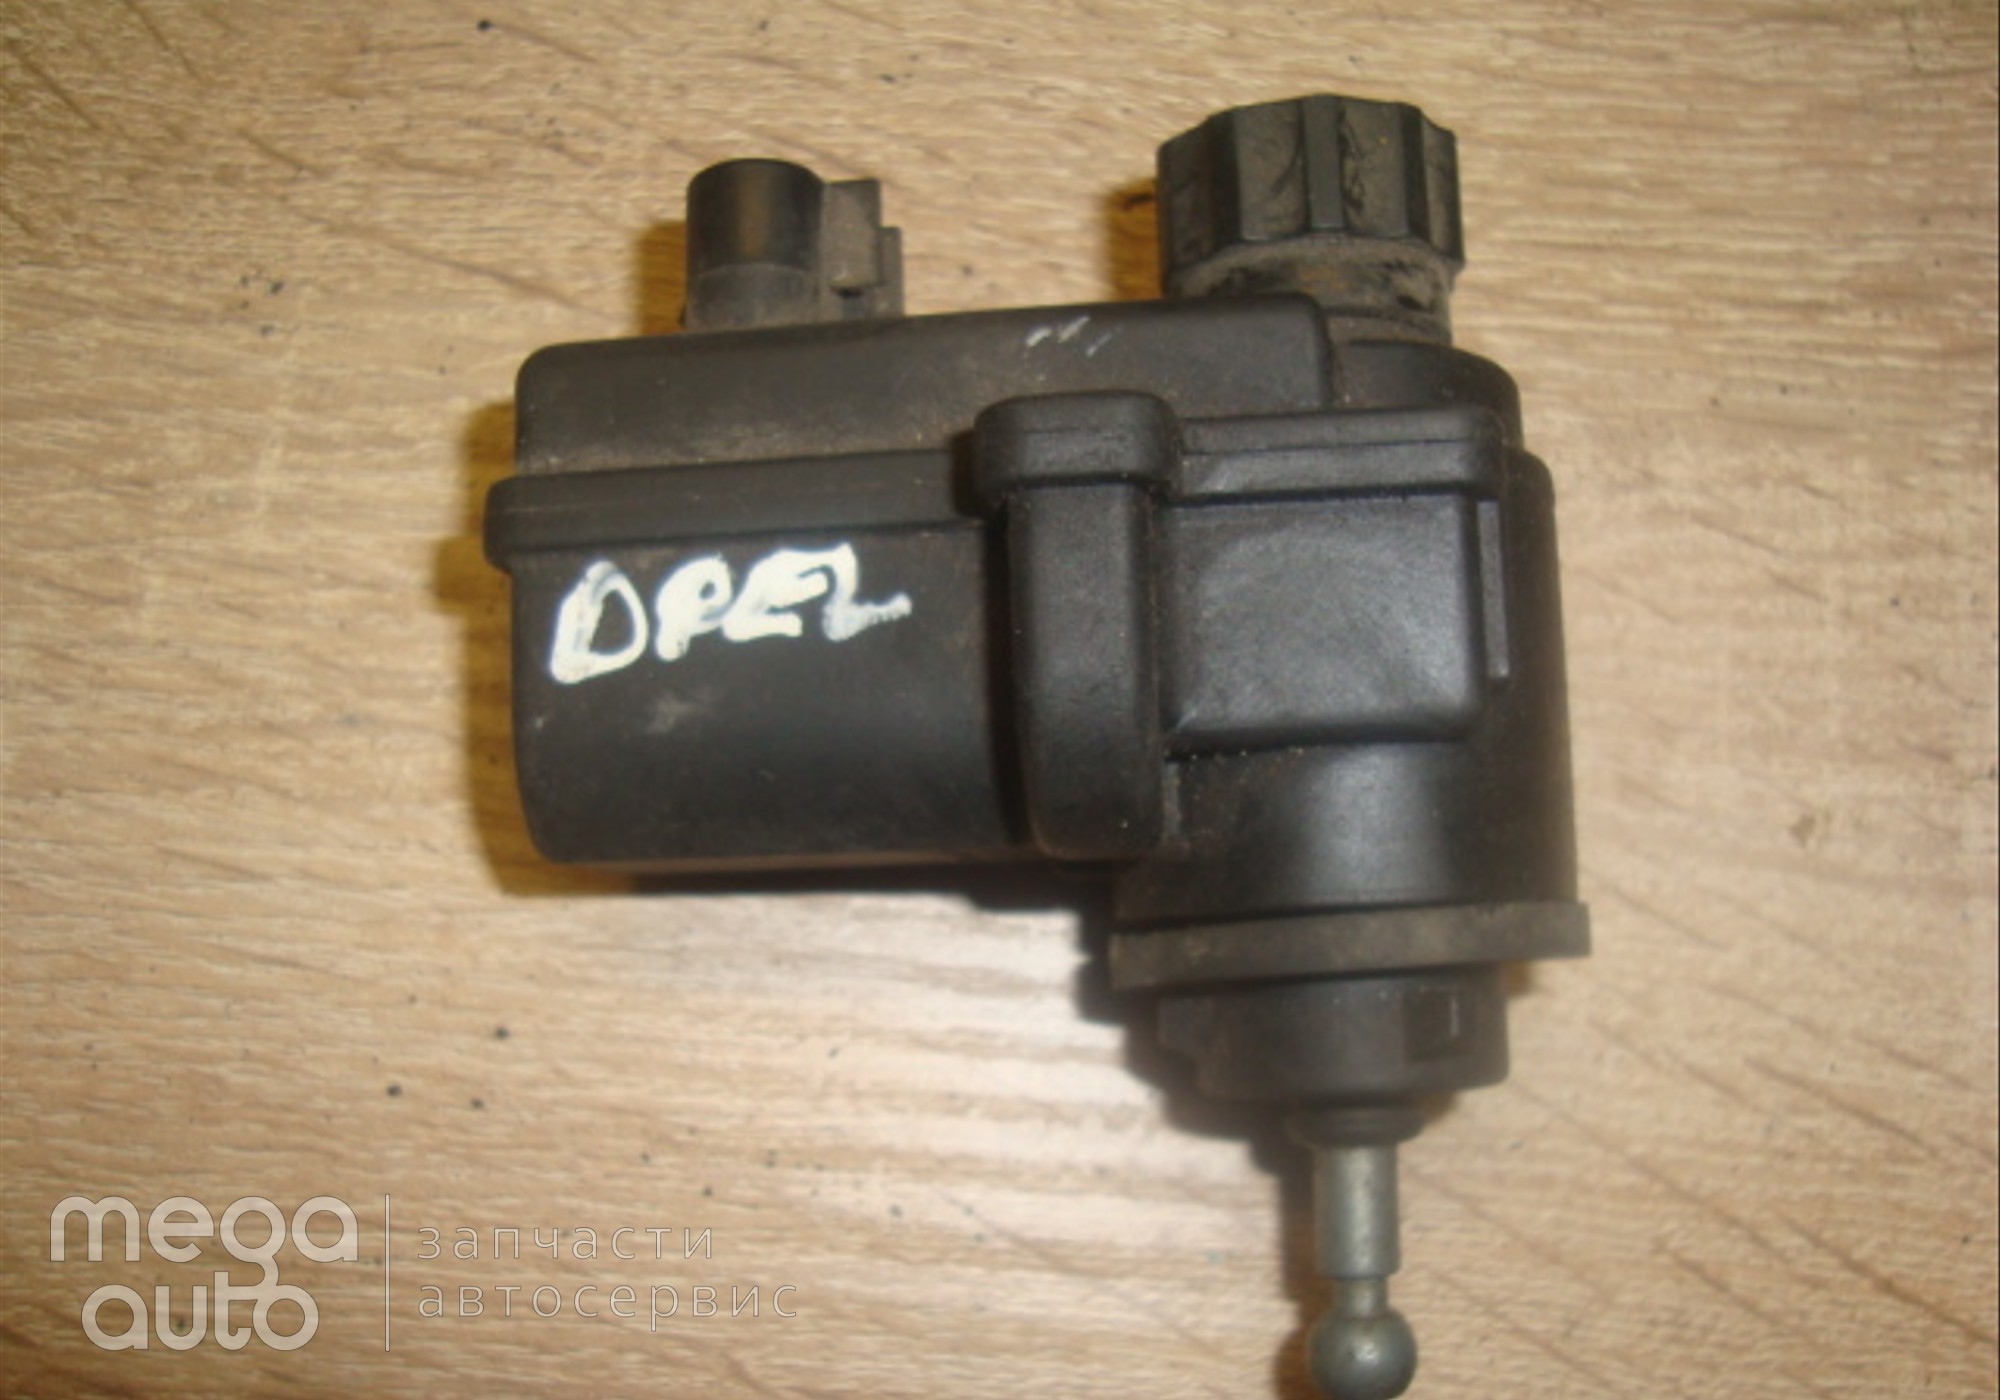 90413185 Моторчик корректора фары опель для Opel Corsa